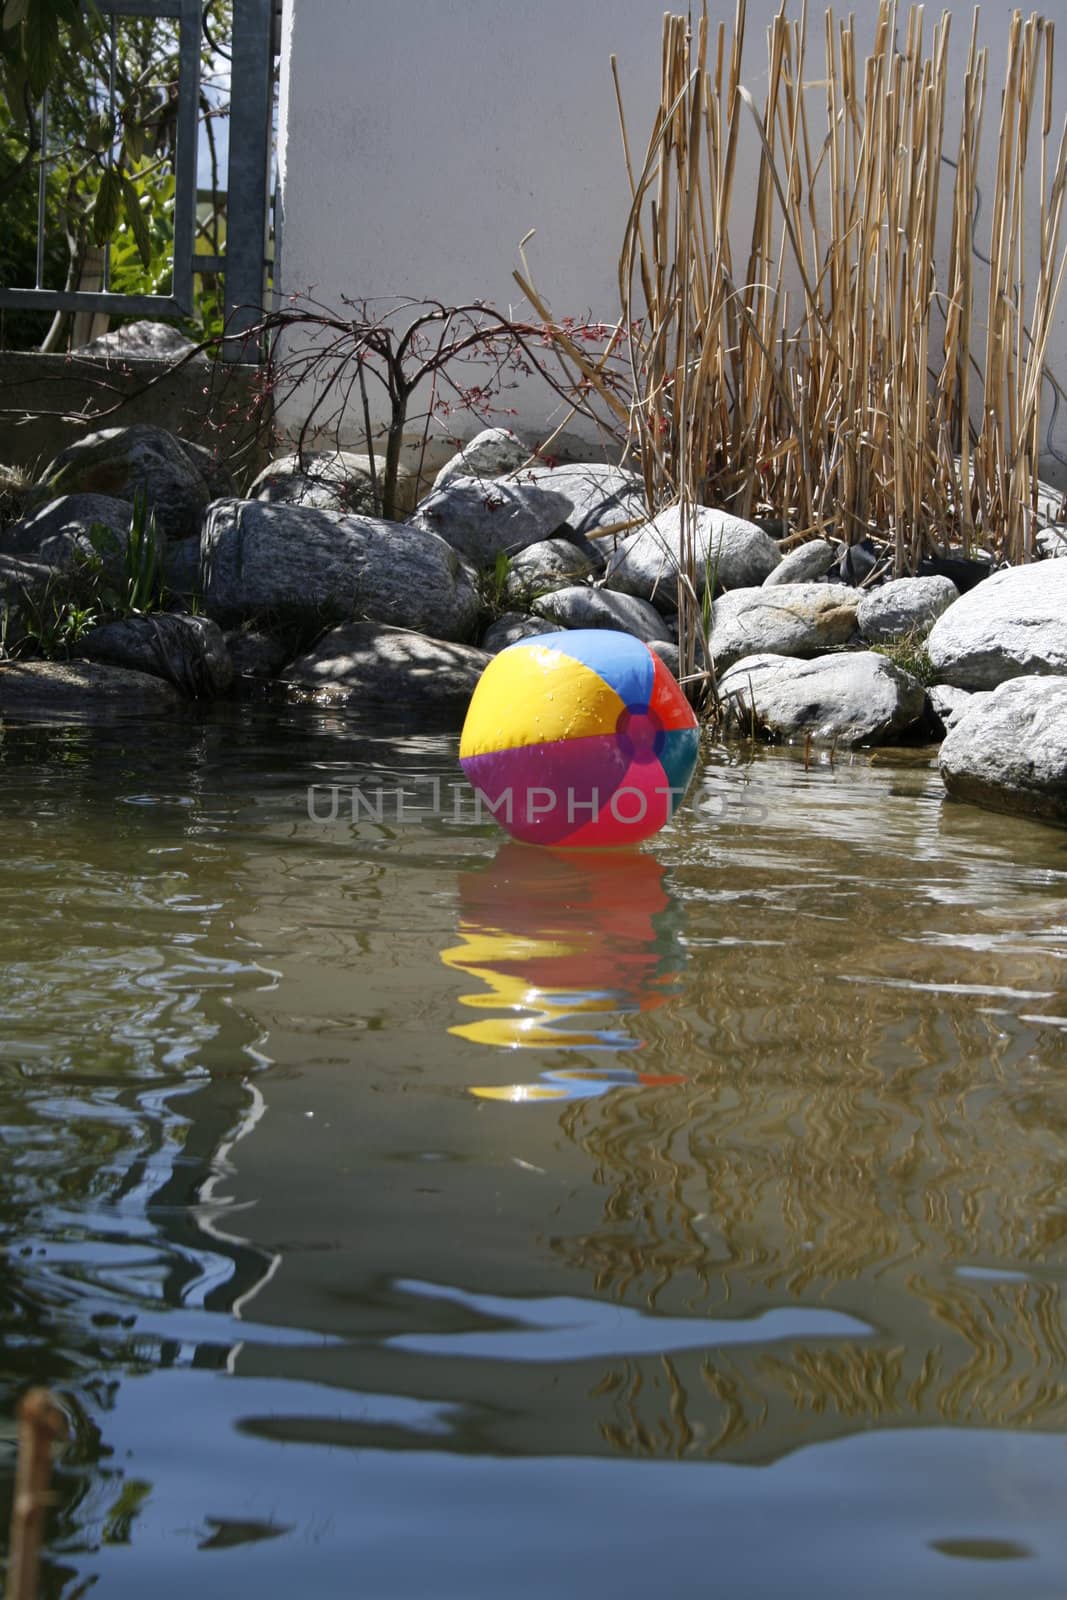 a beach ball on a pond by koep